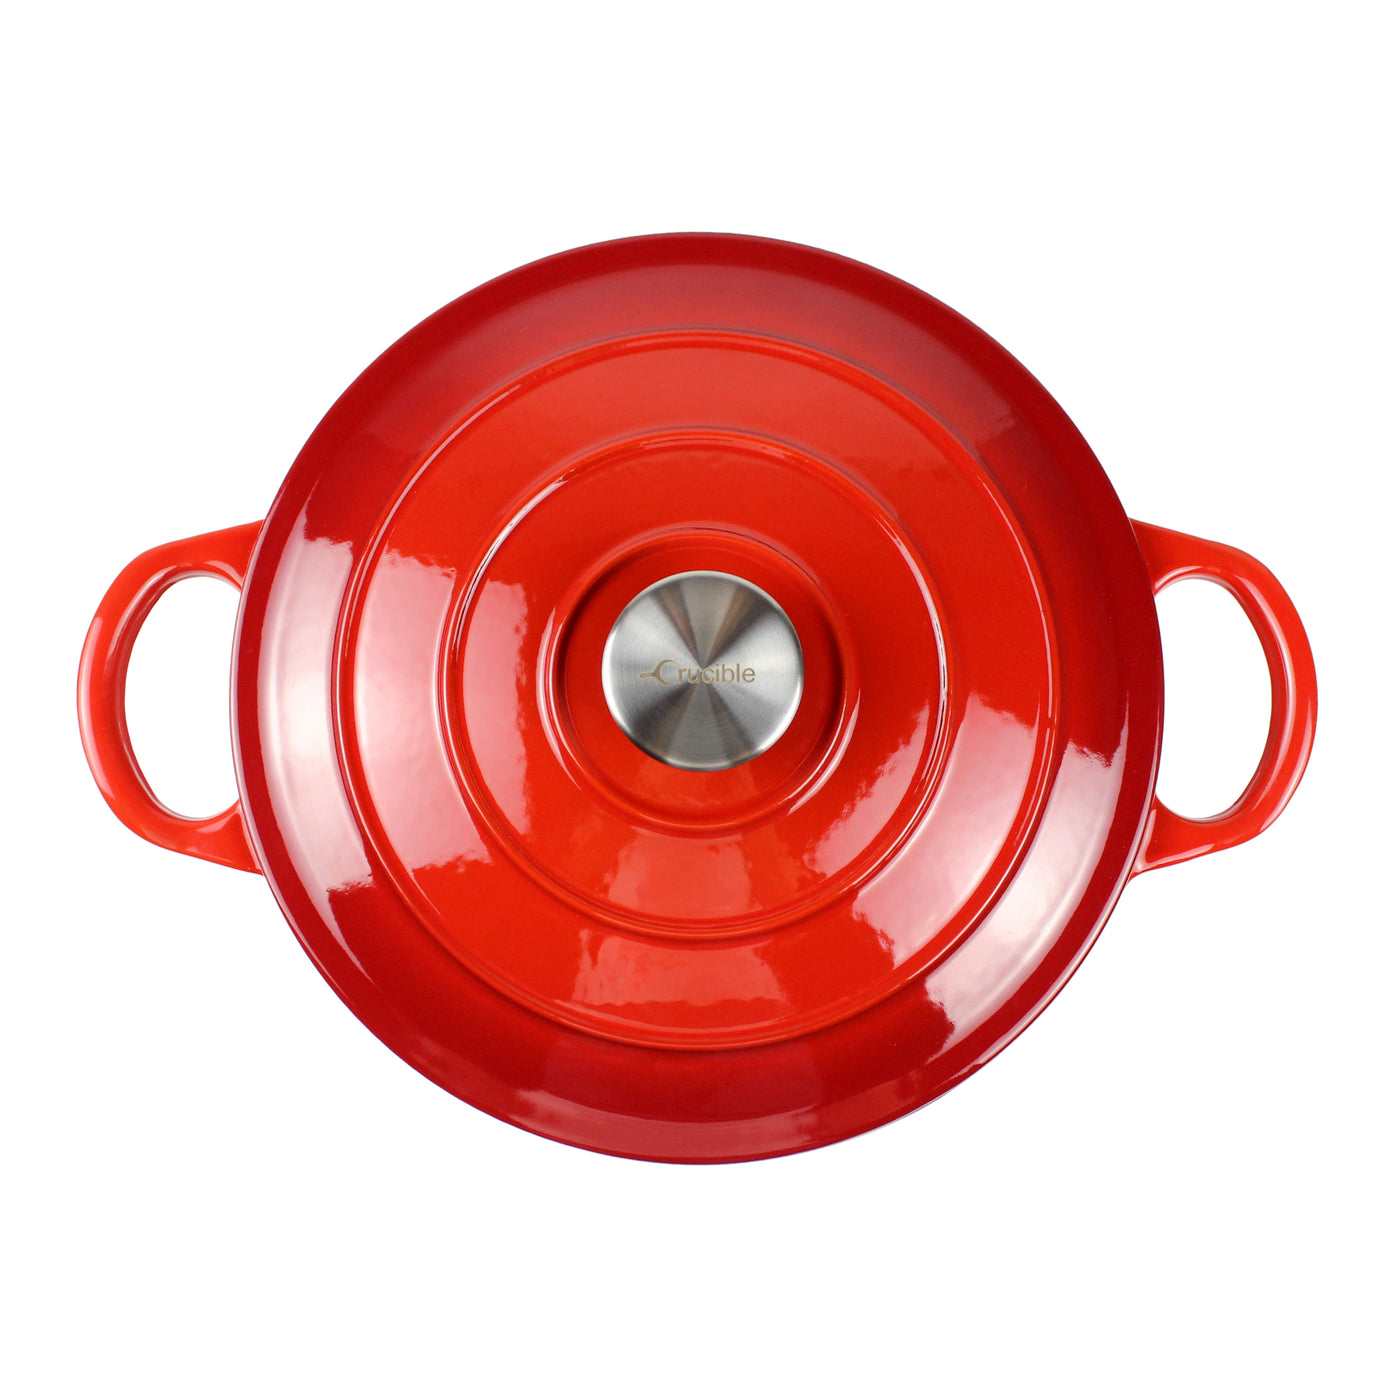 Emaljert støpejern Dutch Oven gryte, gryterett - rund rød 10,23" (26 cm)